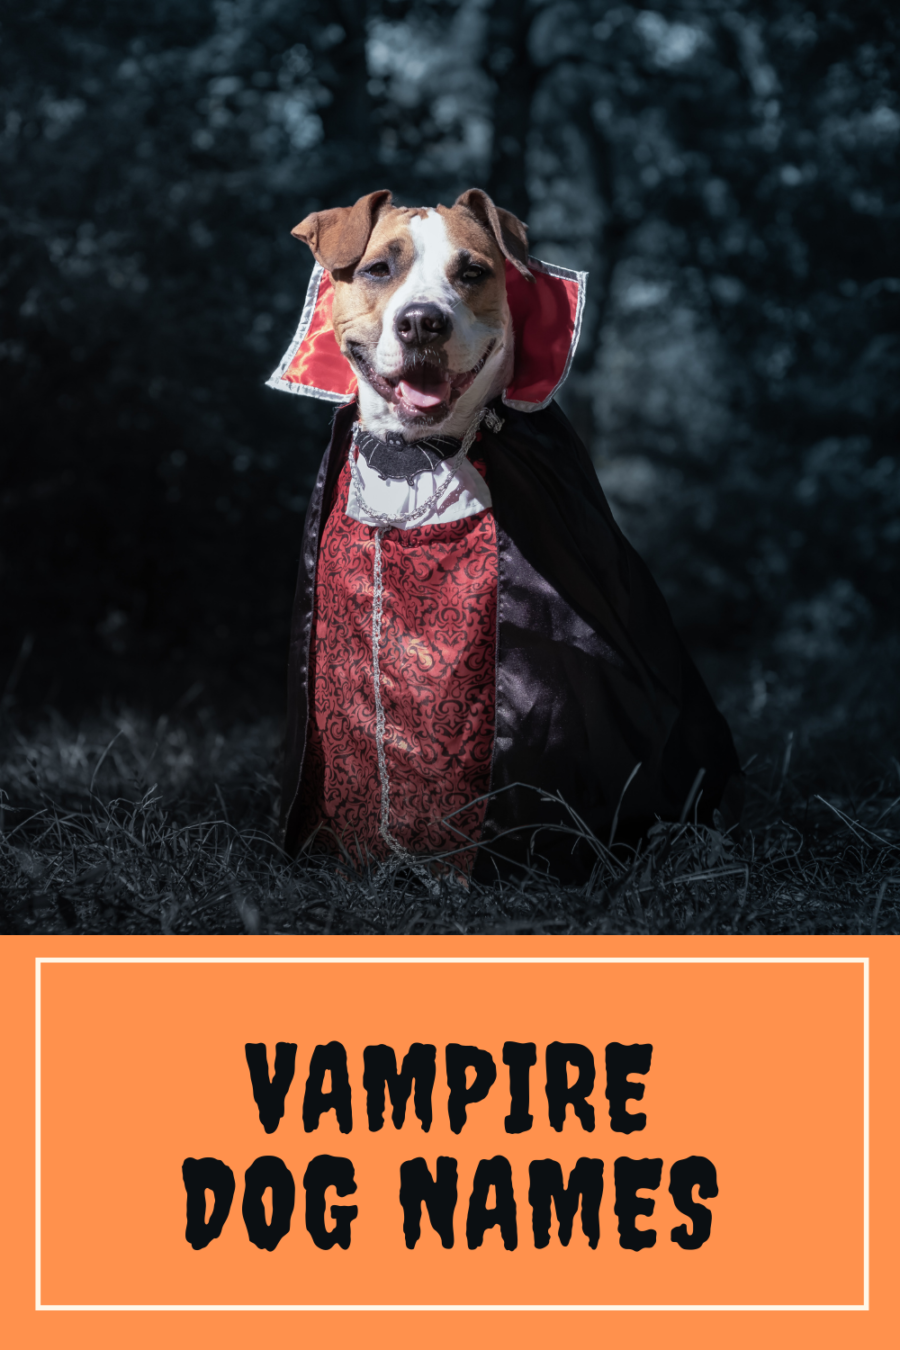 VAMPIRE DOG NAMES